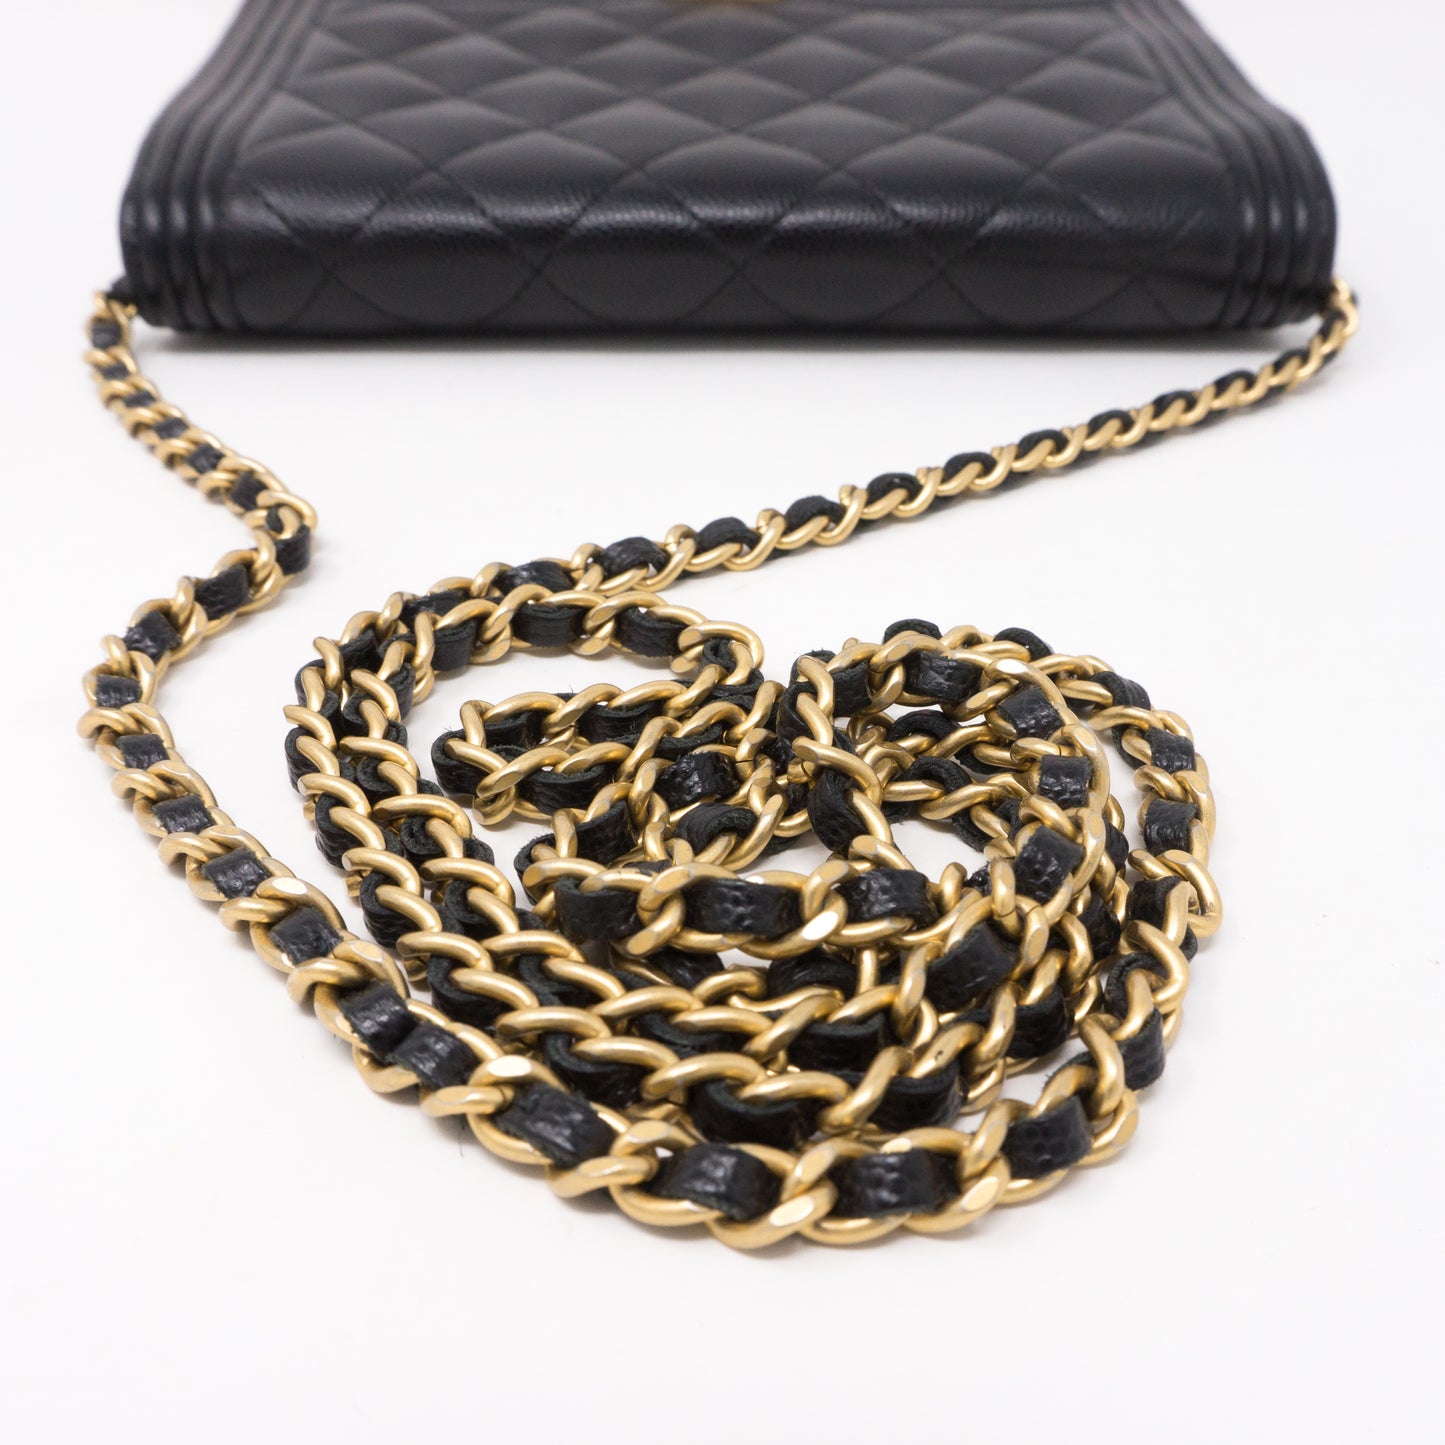 Boy Wallet On Chain Black Caviar Leather